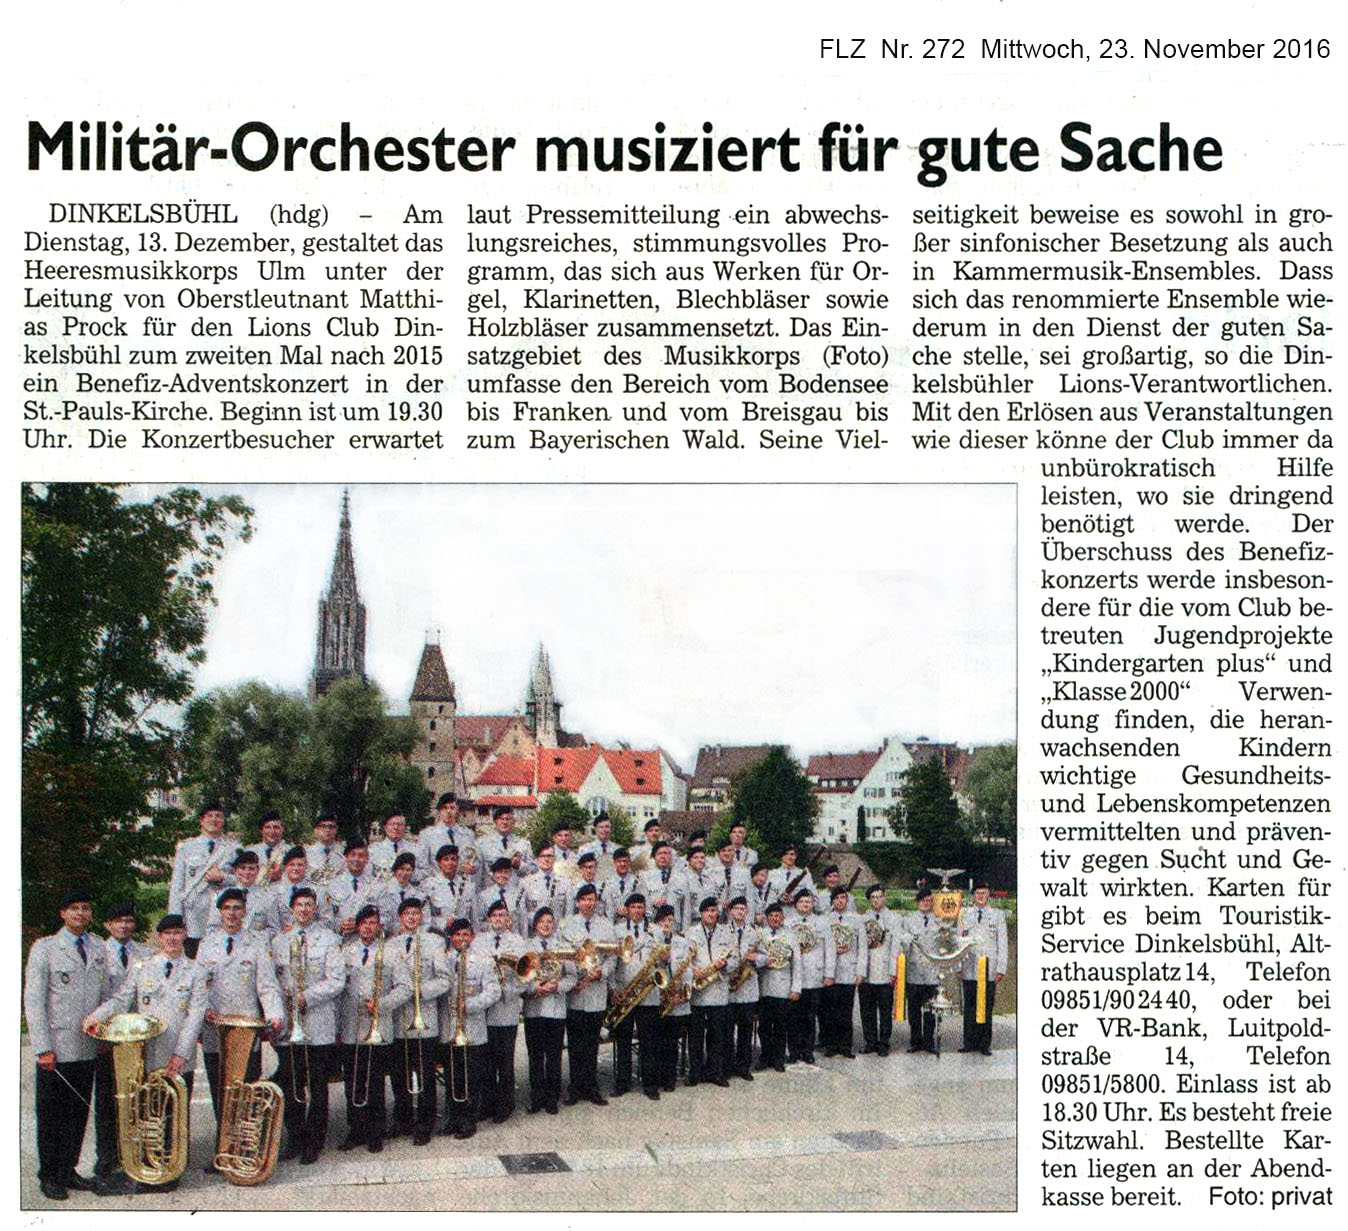 20161123_Militaer-Orchester musiziert_fuer_gute_Sache_200_8